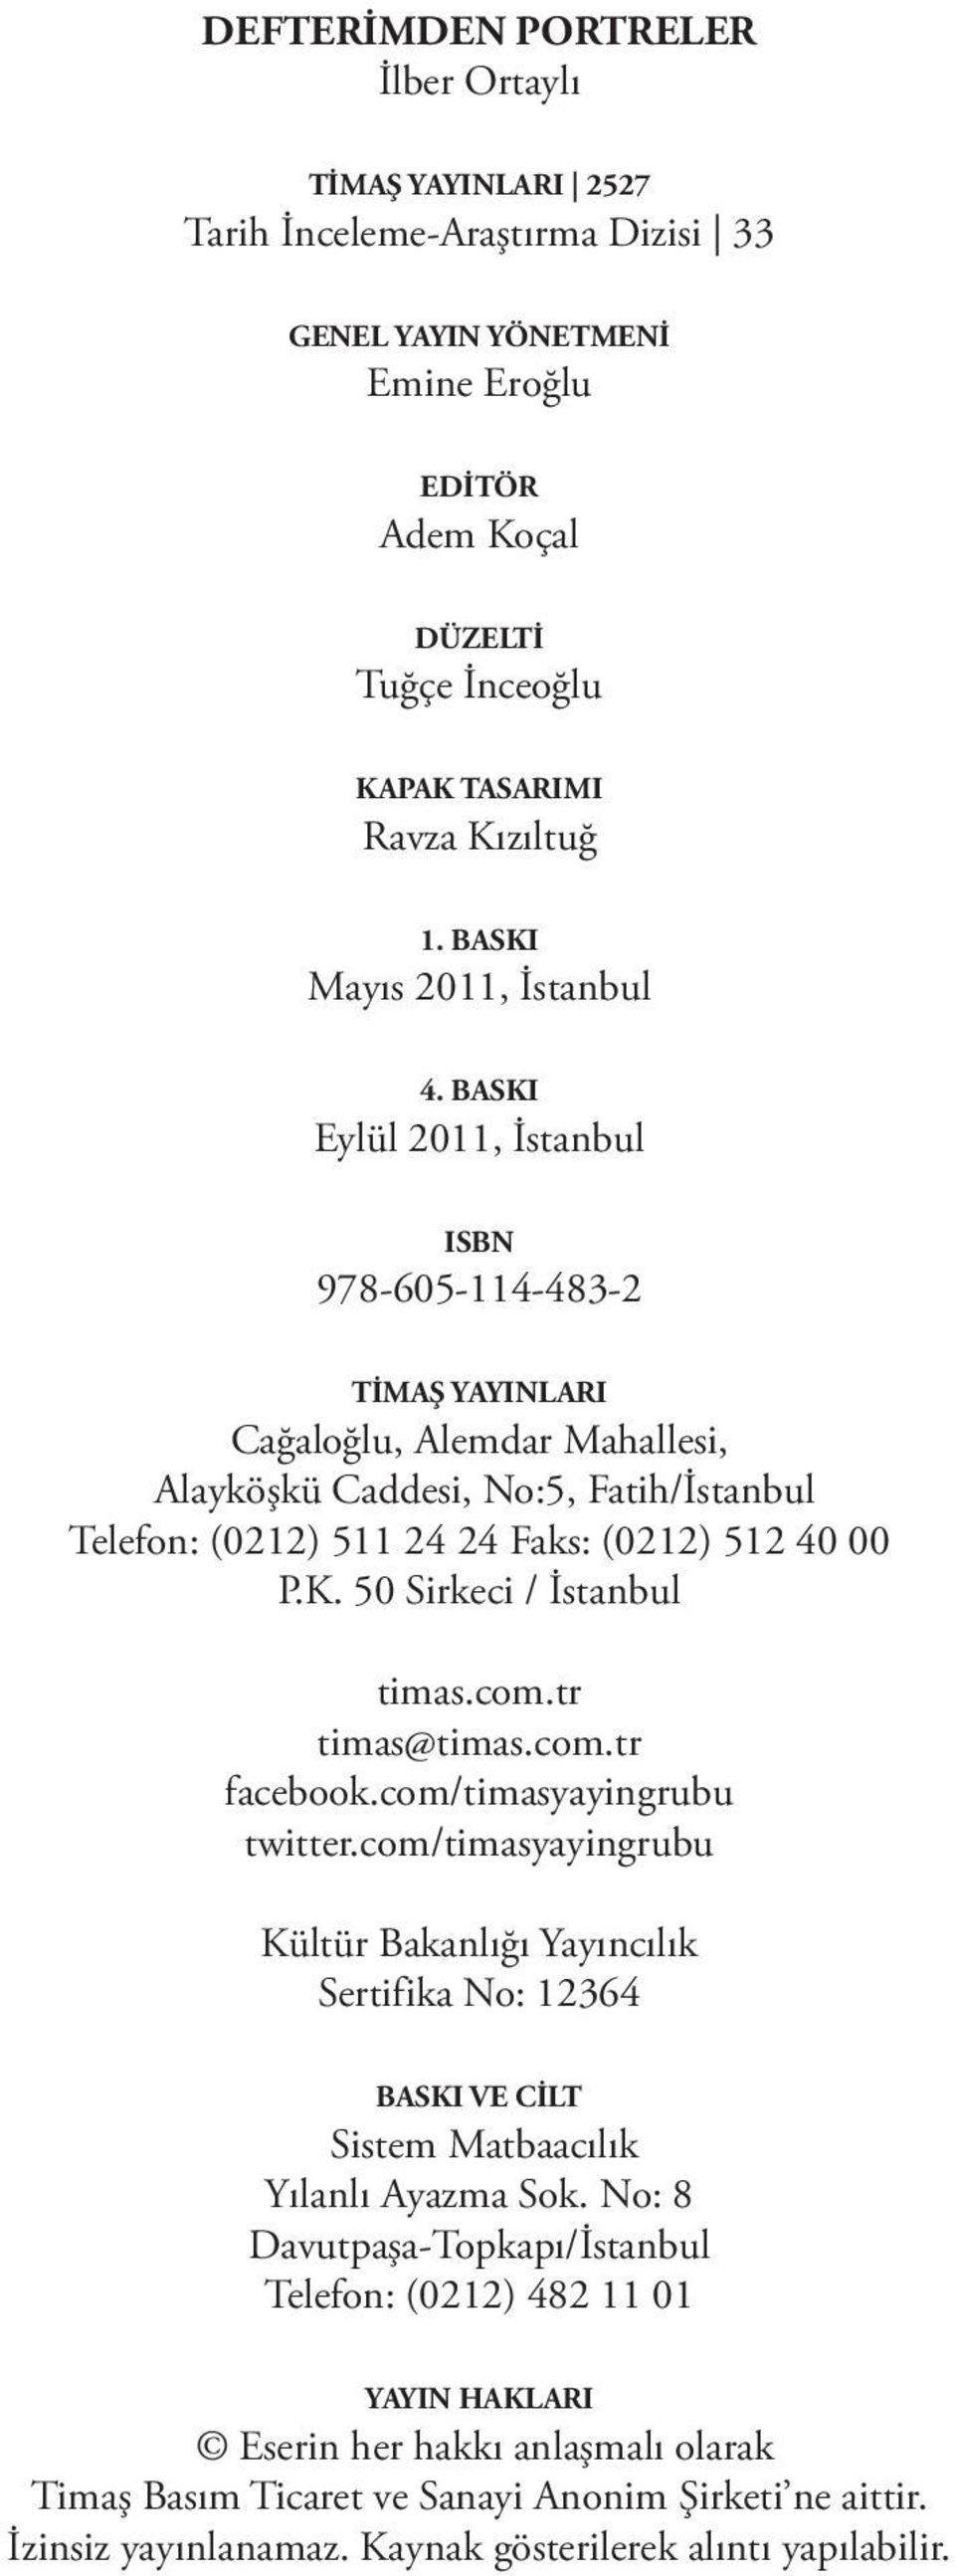 BASKI Eylül 2011, İstanbul ISBN 978-605-114-483-2 TİMAŞ YAYINLARI Cağaloğlu, Alemdar Mahallesi, Alayköşkü Caddesi, No:5, Fatih/İstanbul Telefon: (0212) 511 24 24 Faks: (0212) 512 40 00 P.K. 50 Sirkeci / İstanbul timas.